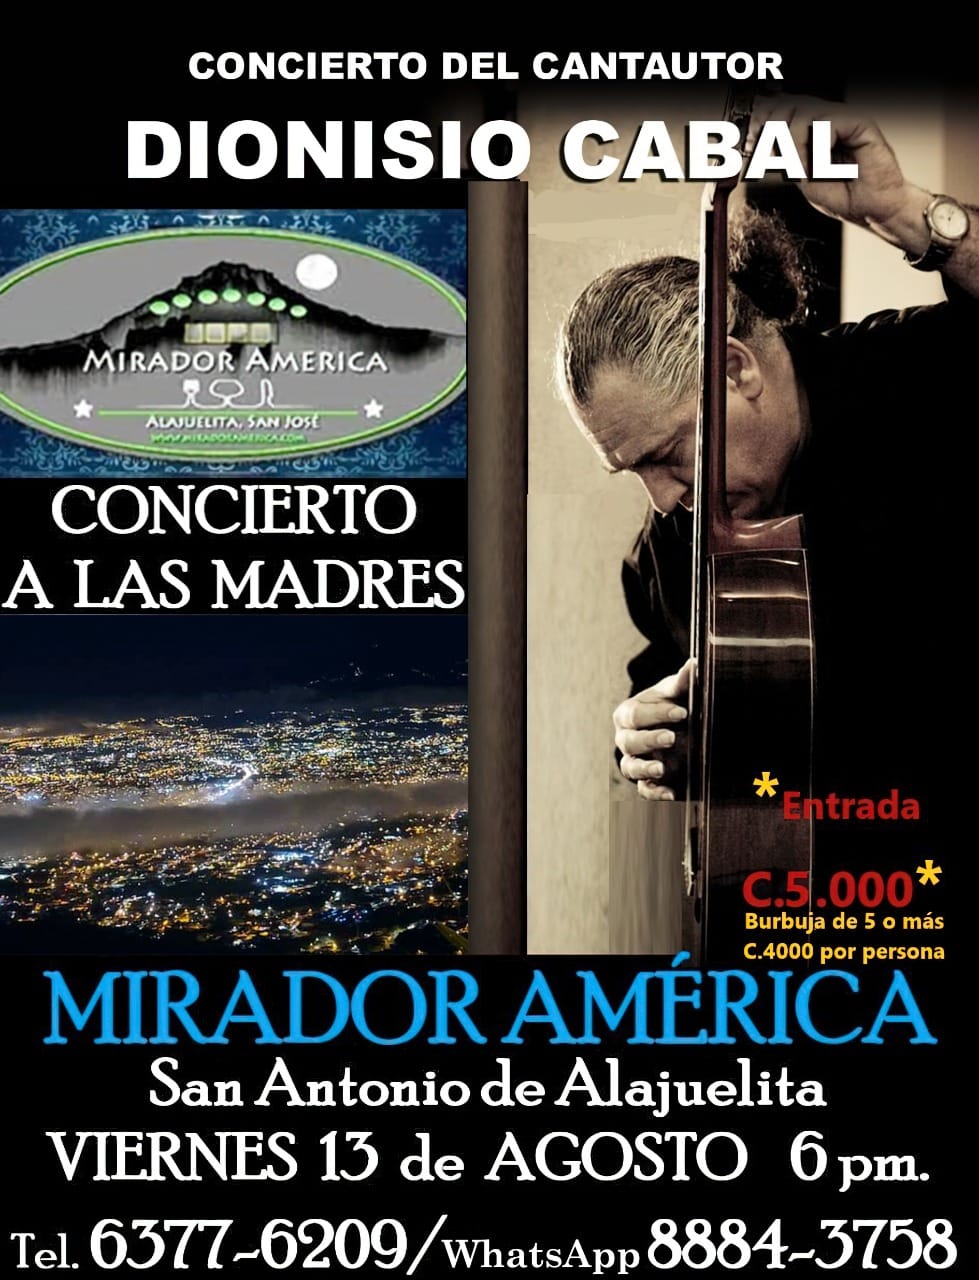 Gran concierto con Dionisio Cabal